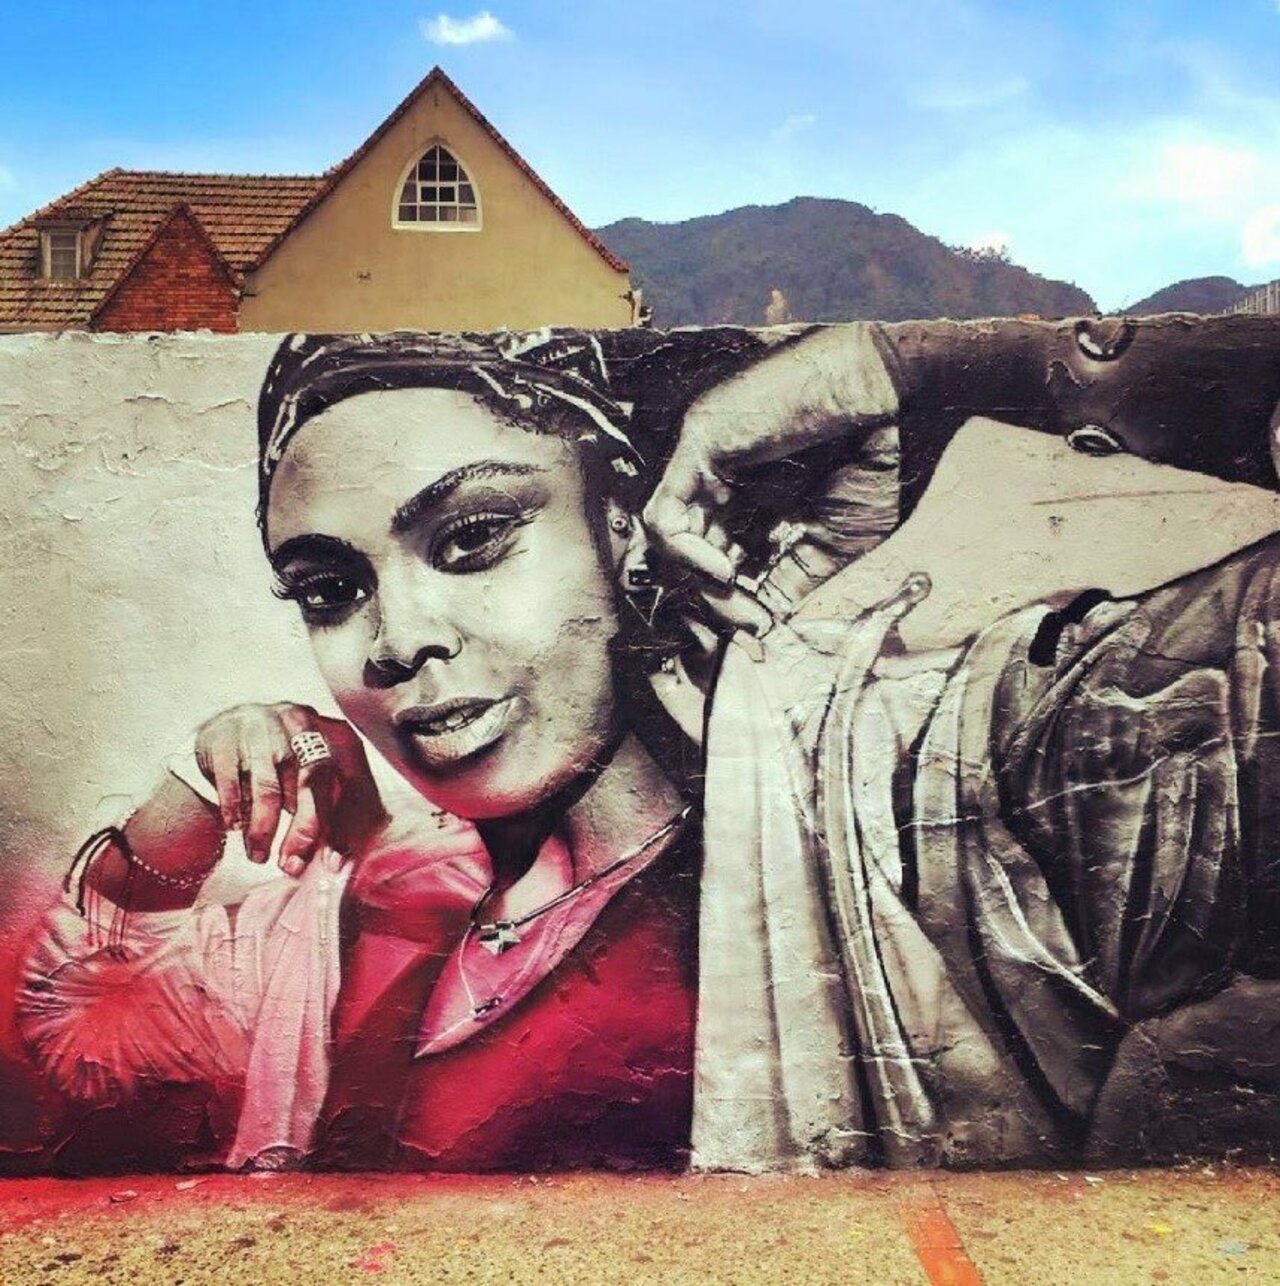 RT GoogleStreetArt: New Street Art by Dexs found in Bogota Colombia #art #graffiti #mural #streetart https://t.co/ygFMsFo1Sh